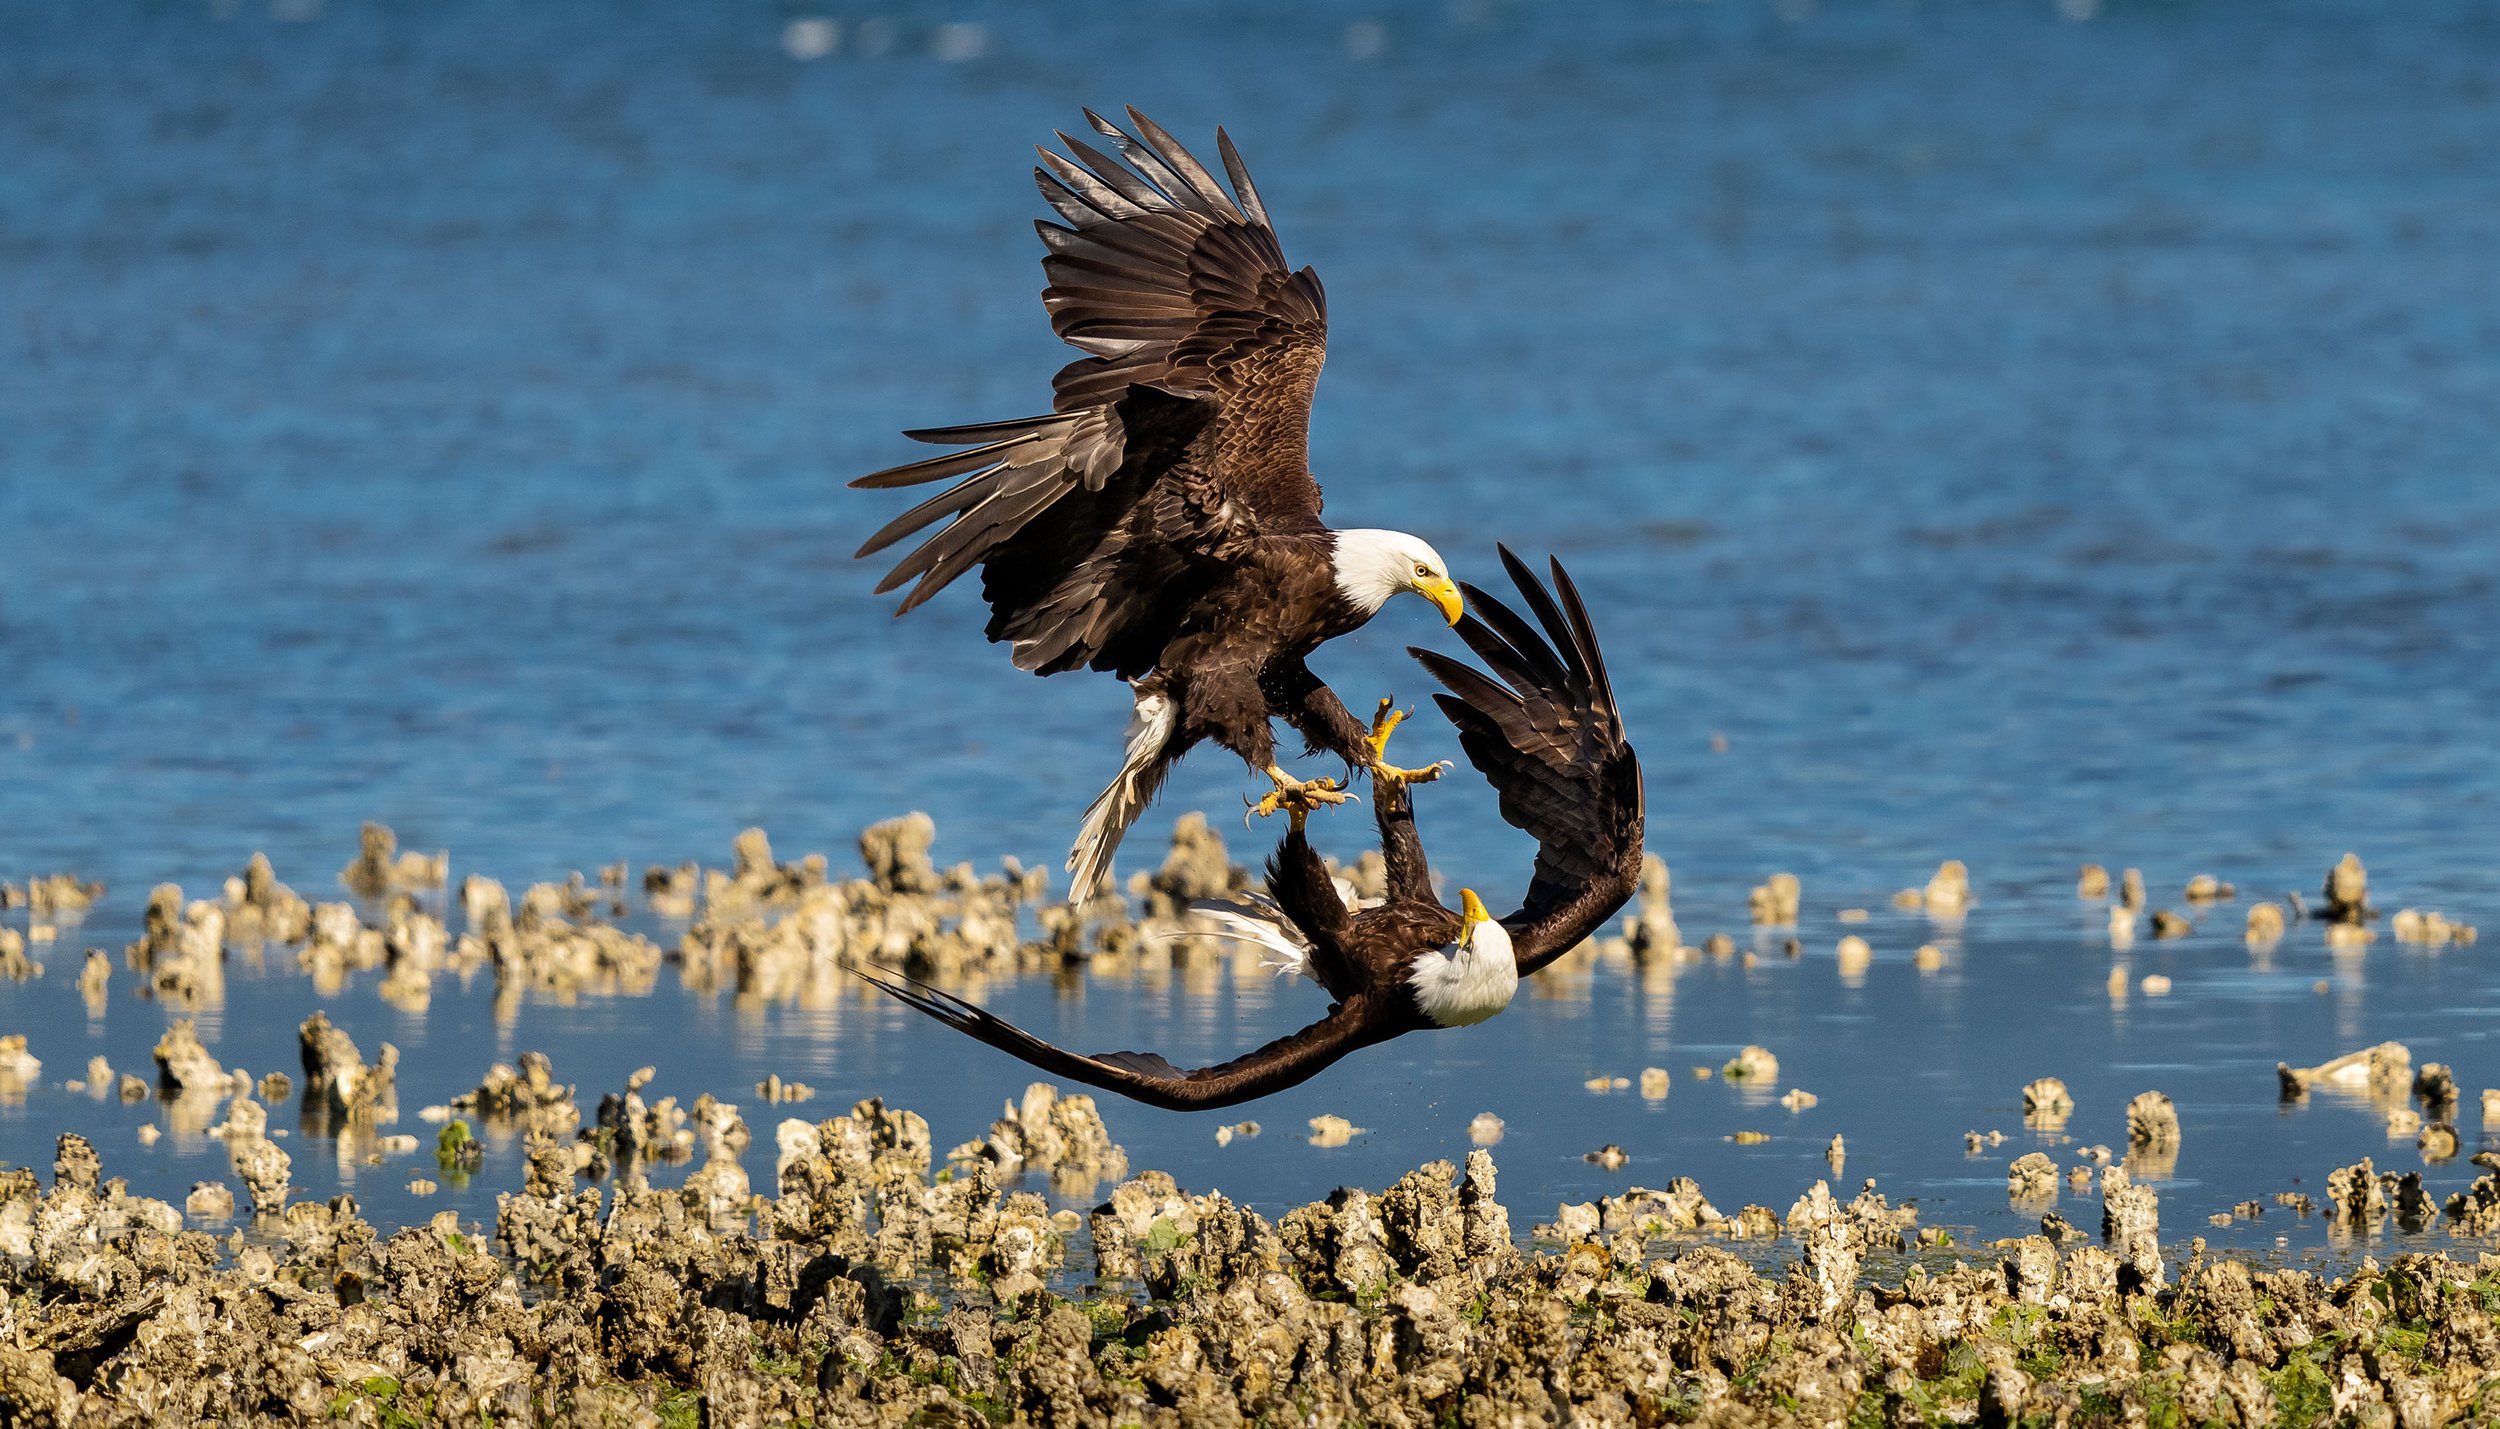  Wildlife: Bald eagles feeding at low tide along the Hood Canal, Olympic Peninsula, Washington 